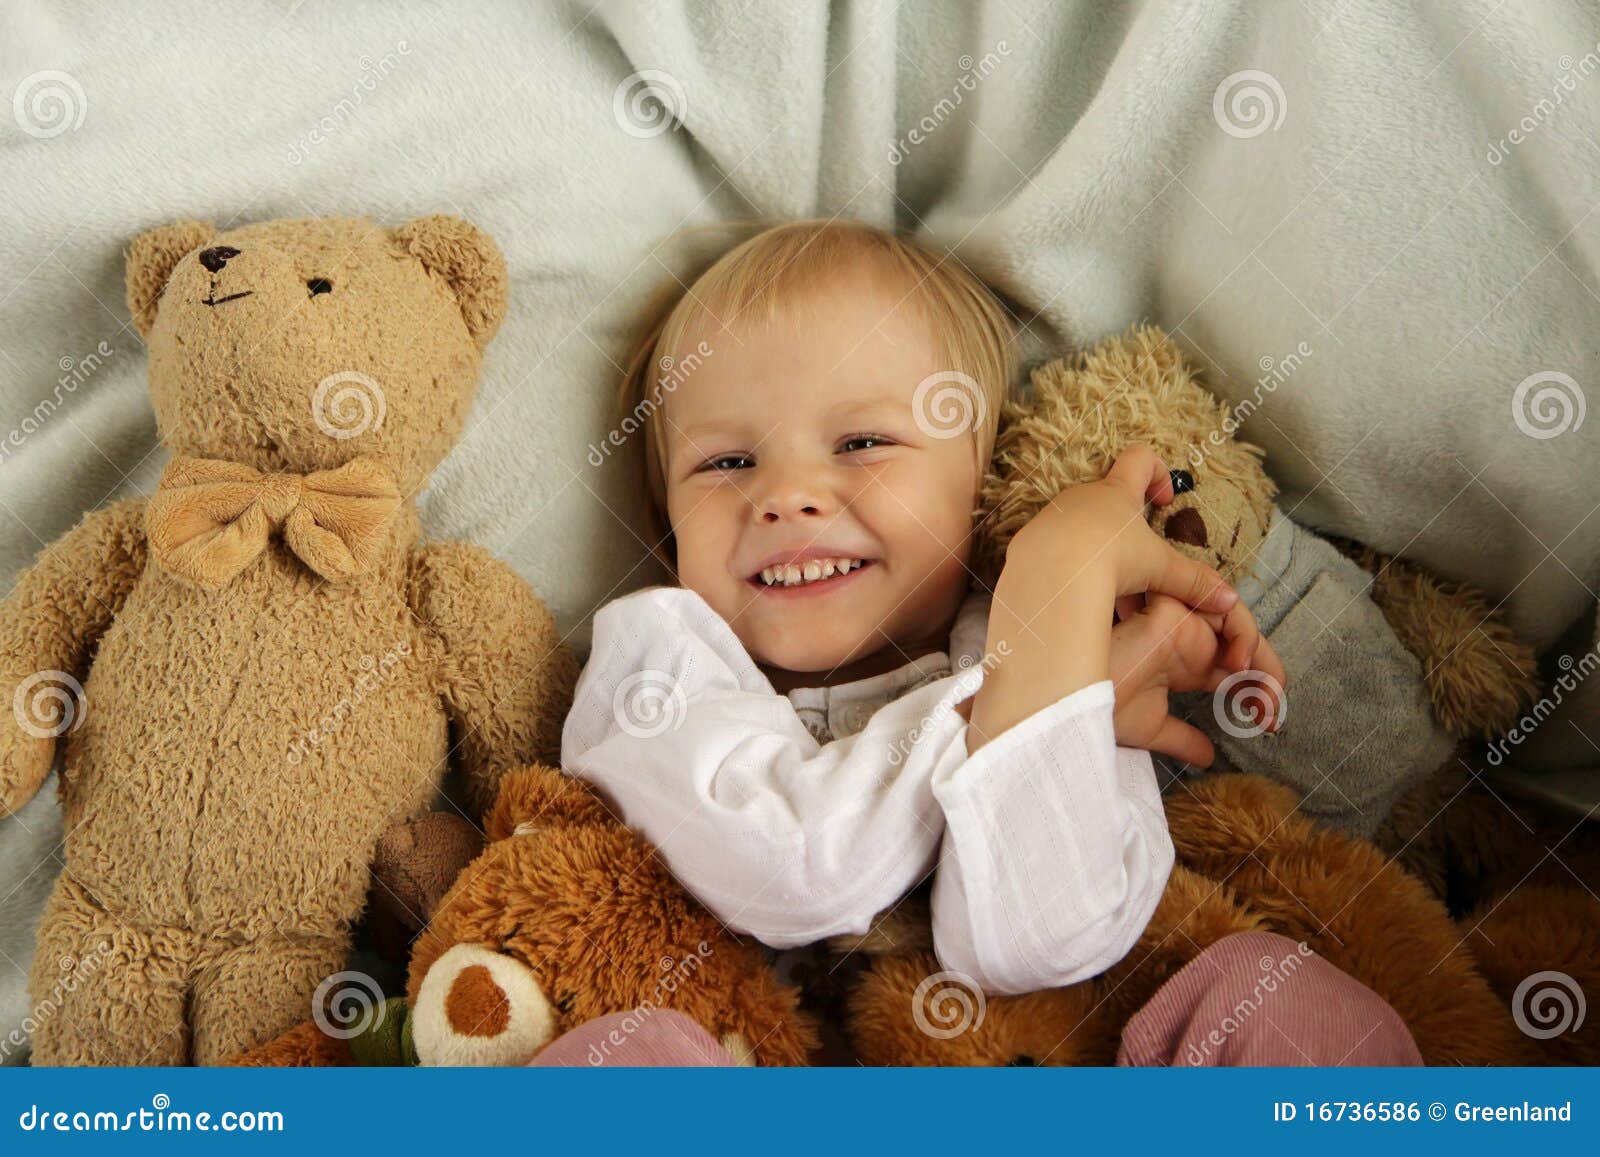 happy child bed teddy bear 16736586